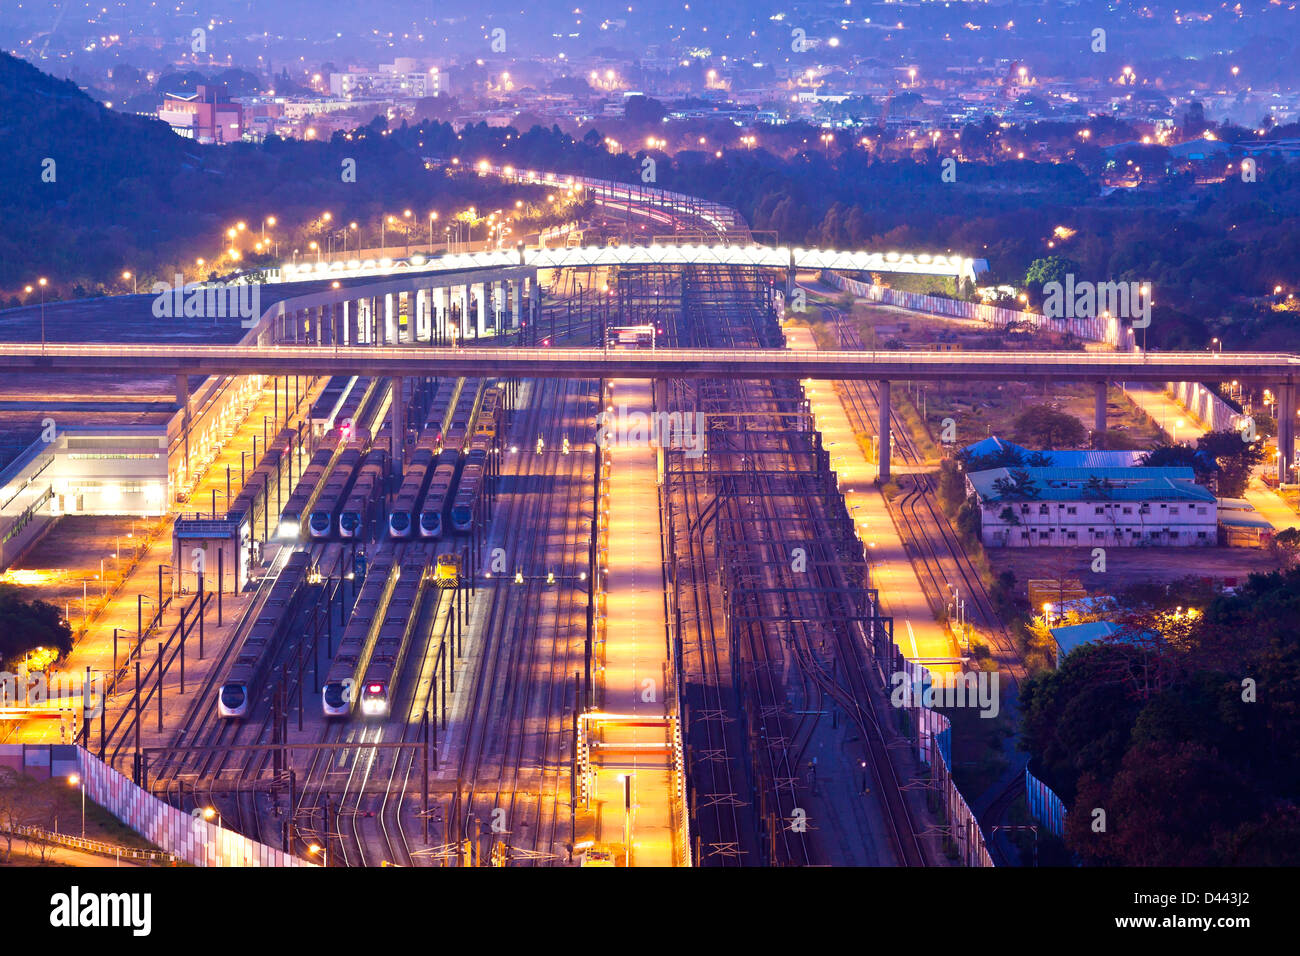 Railway transportation at night Stock Photo